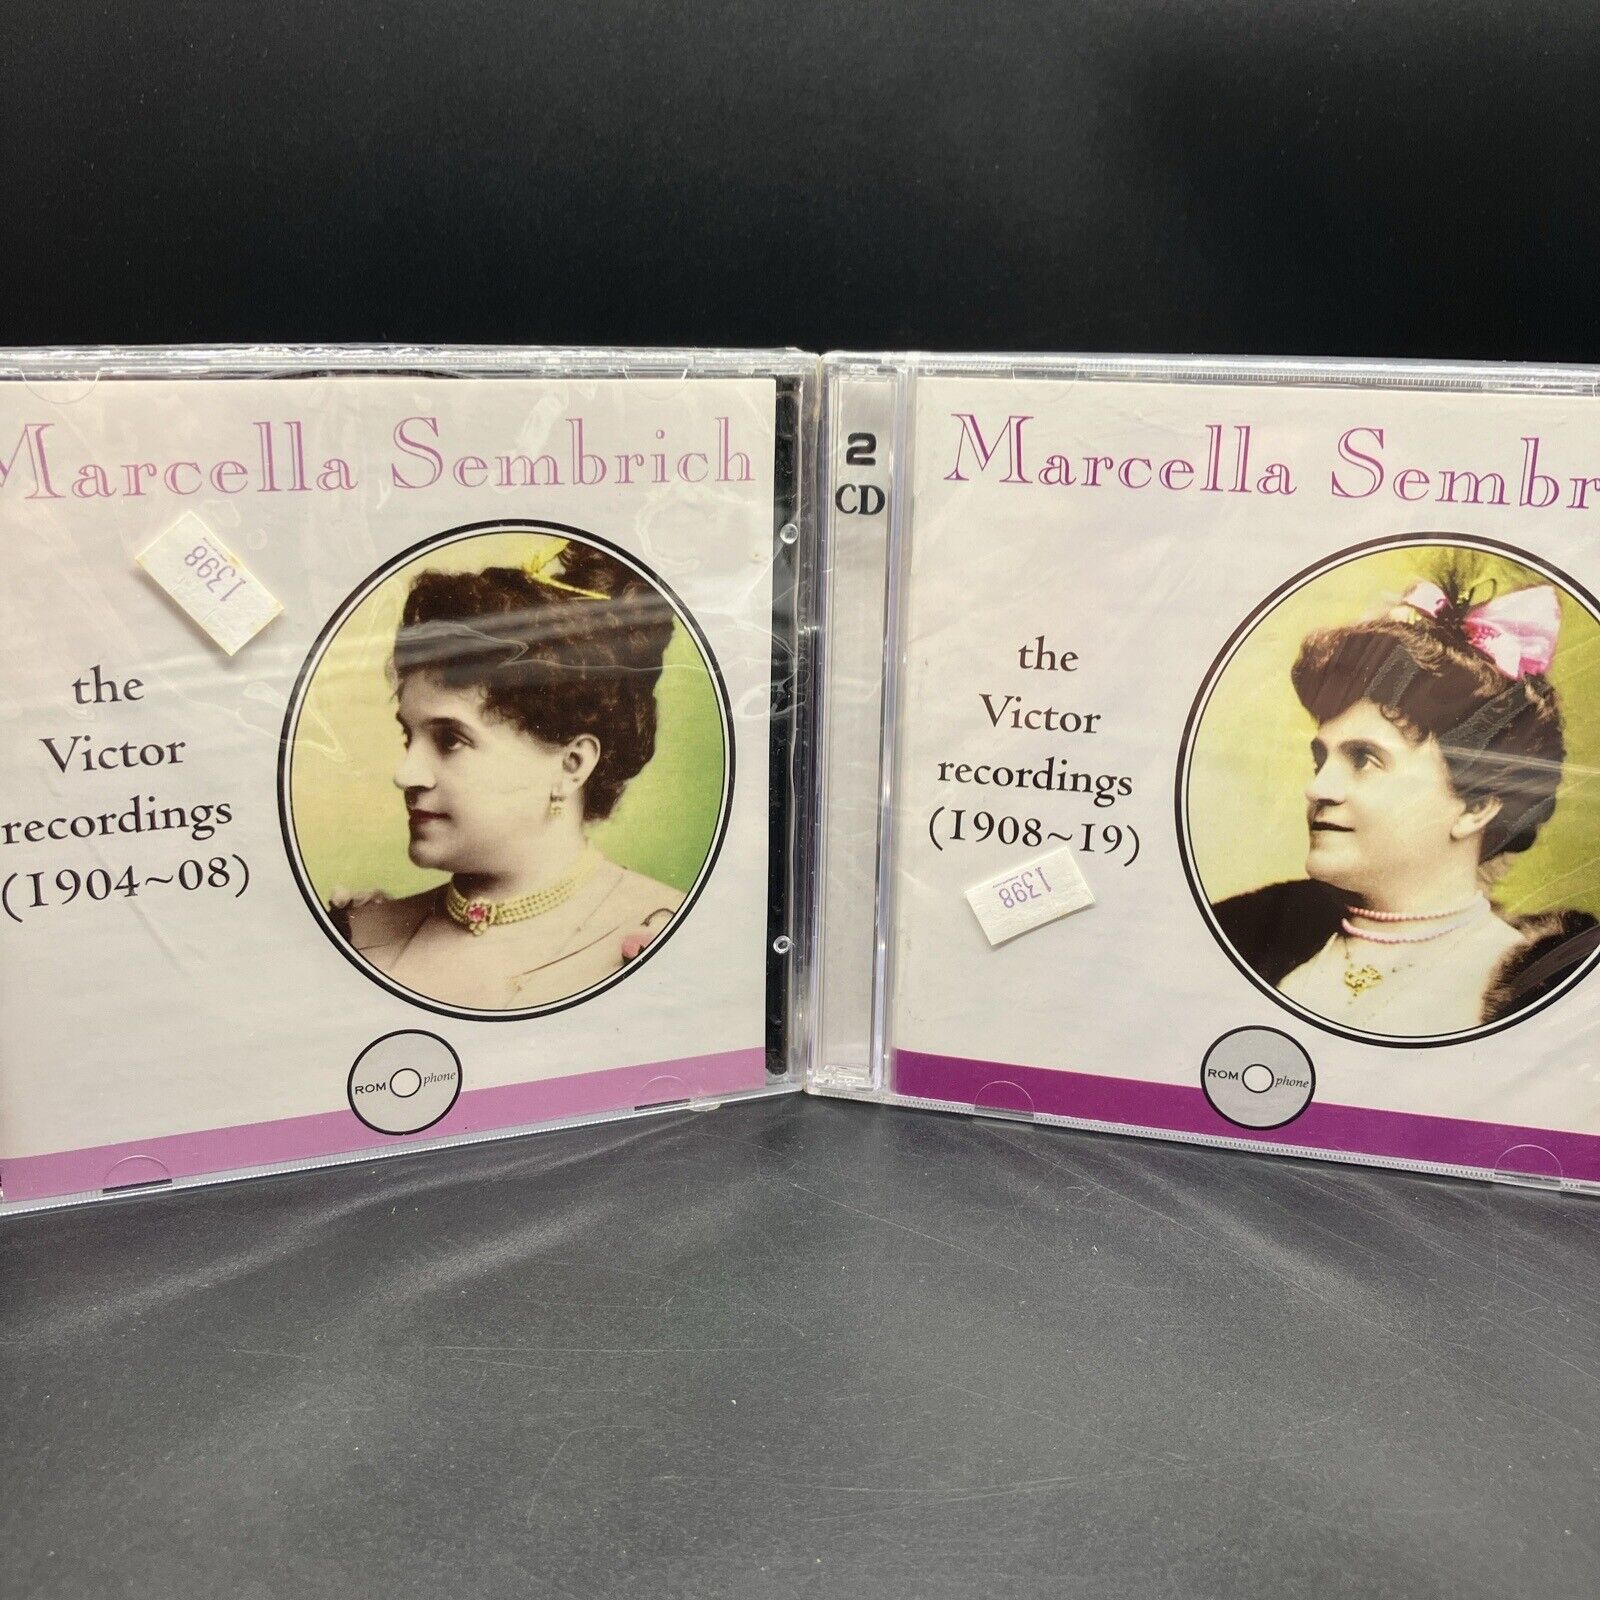 Marcella Sembrich - The Victor Recordings 1904-1908, 1908-1919  2 CDs New